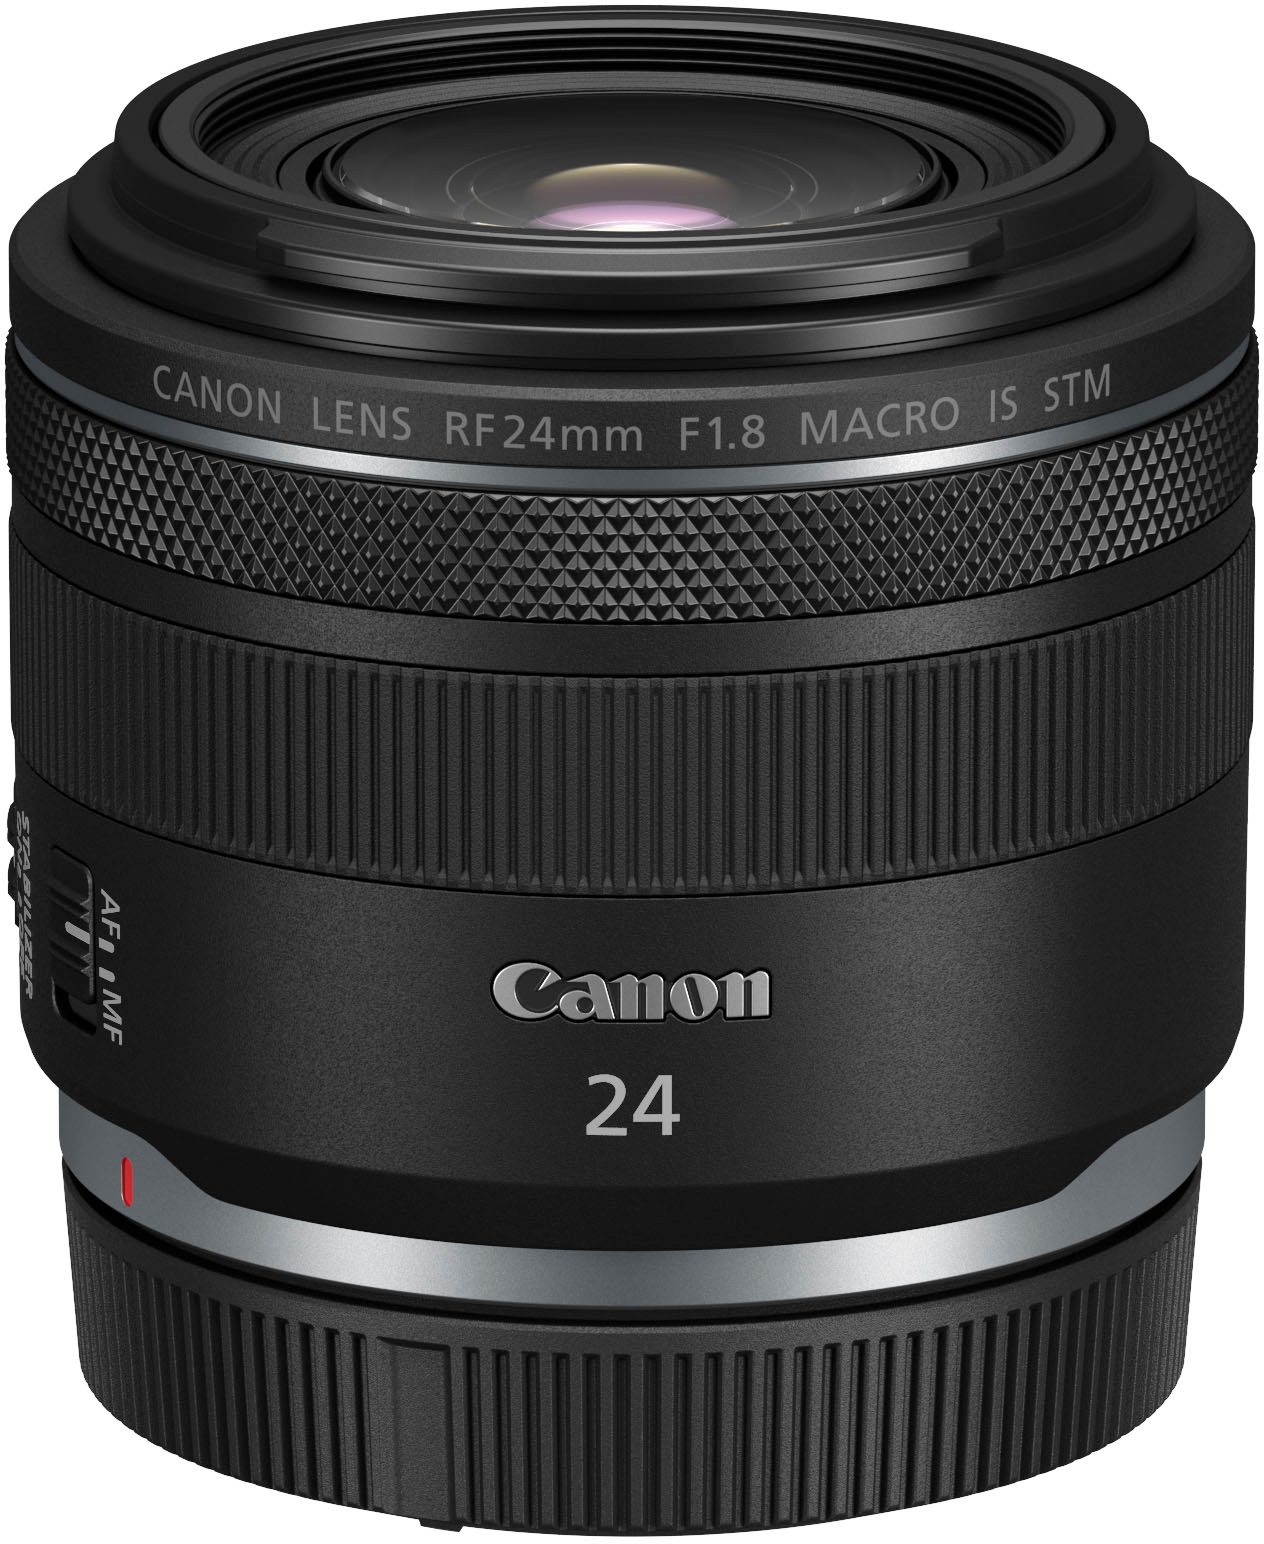 Back View: FE 50mm F2.5 G Full-frame Ultra-compact G Lens for Sony Alpha E-mount Cameras - Black